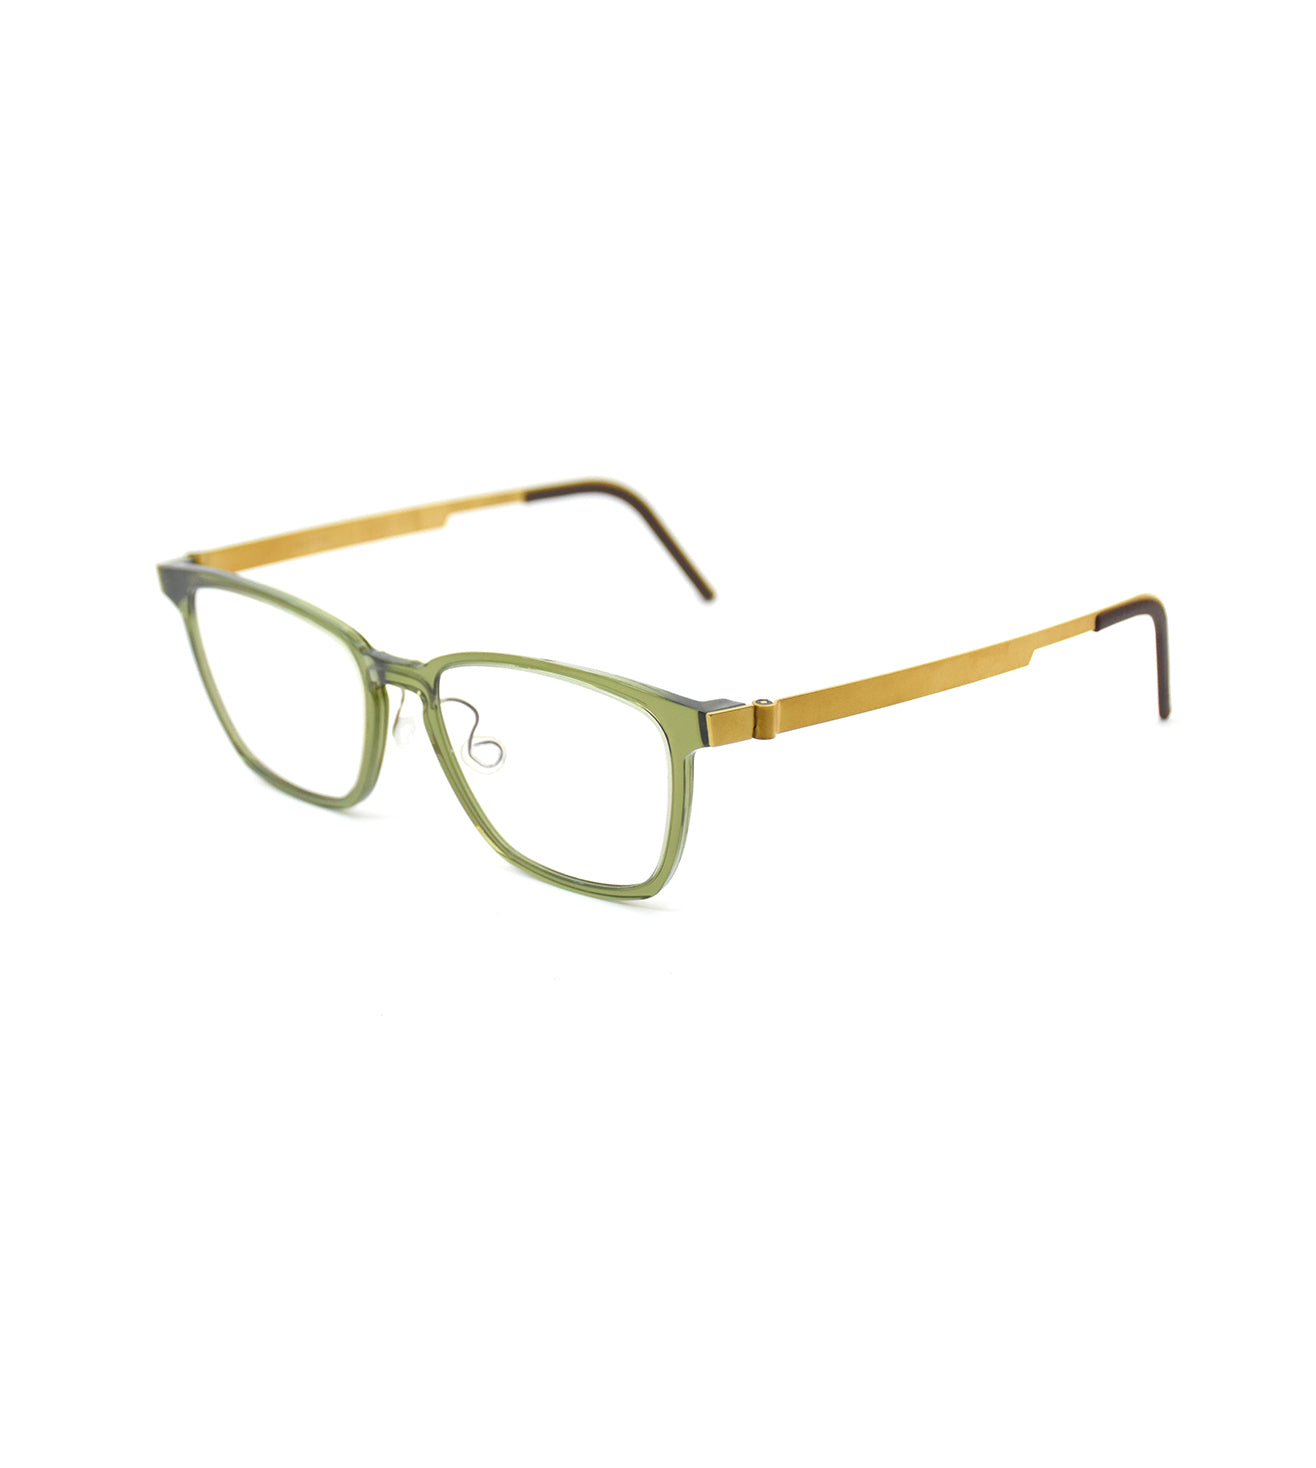 Lindberg Acetanium145 5318.206 glossy Green/gold Eyeglasses